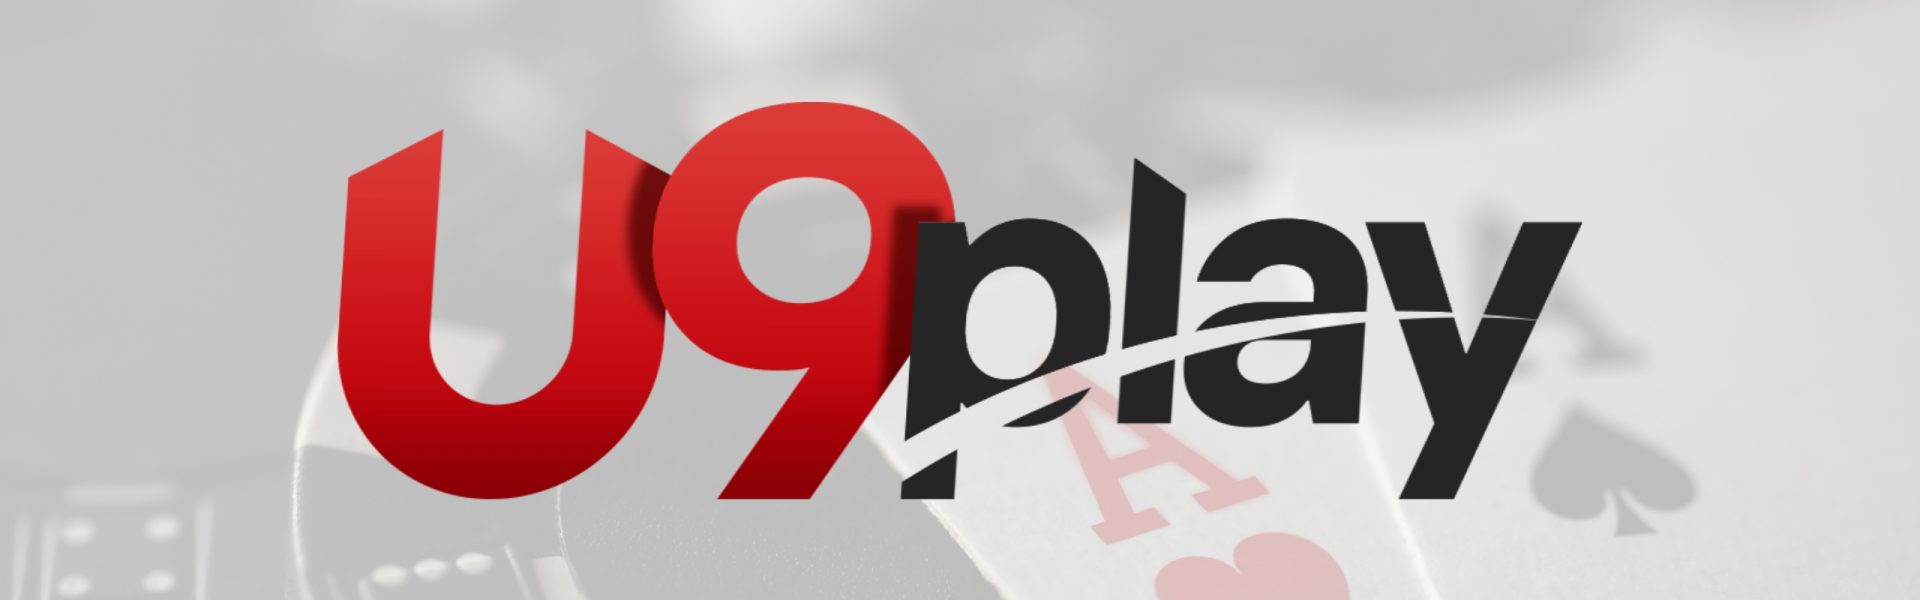 U9Play Logo